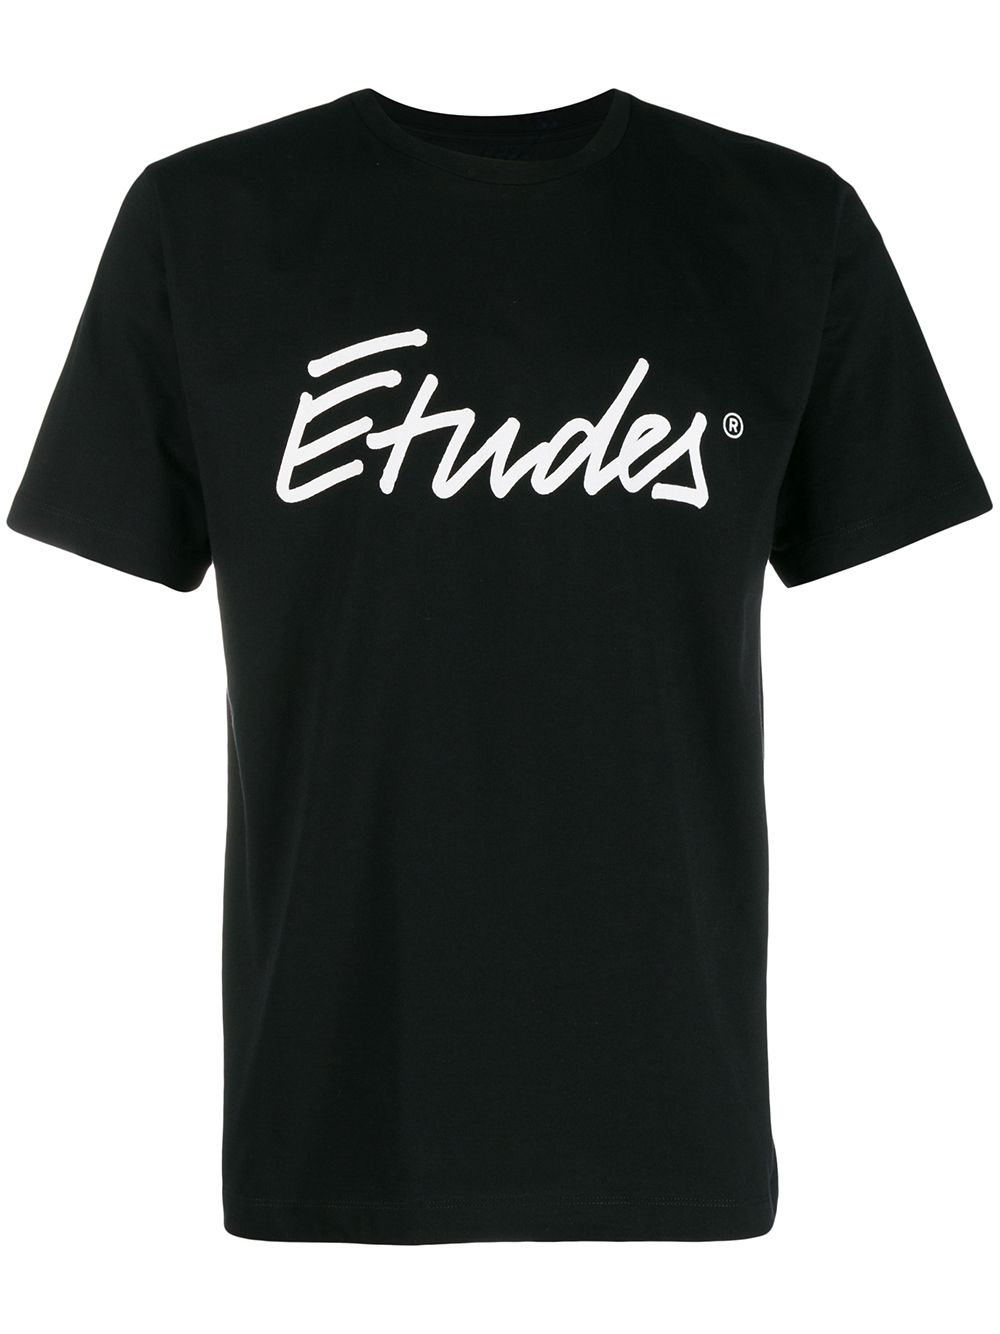 фото Études футболка Wonder с логотипом